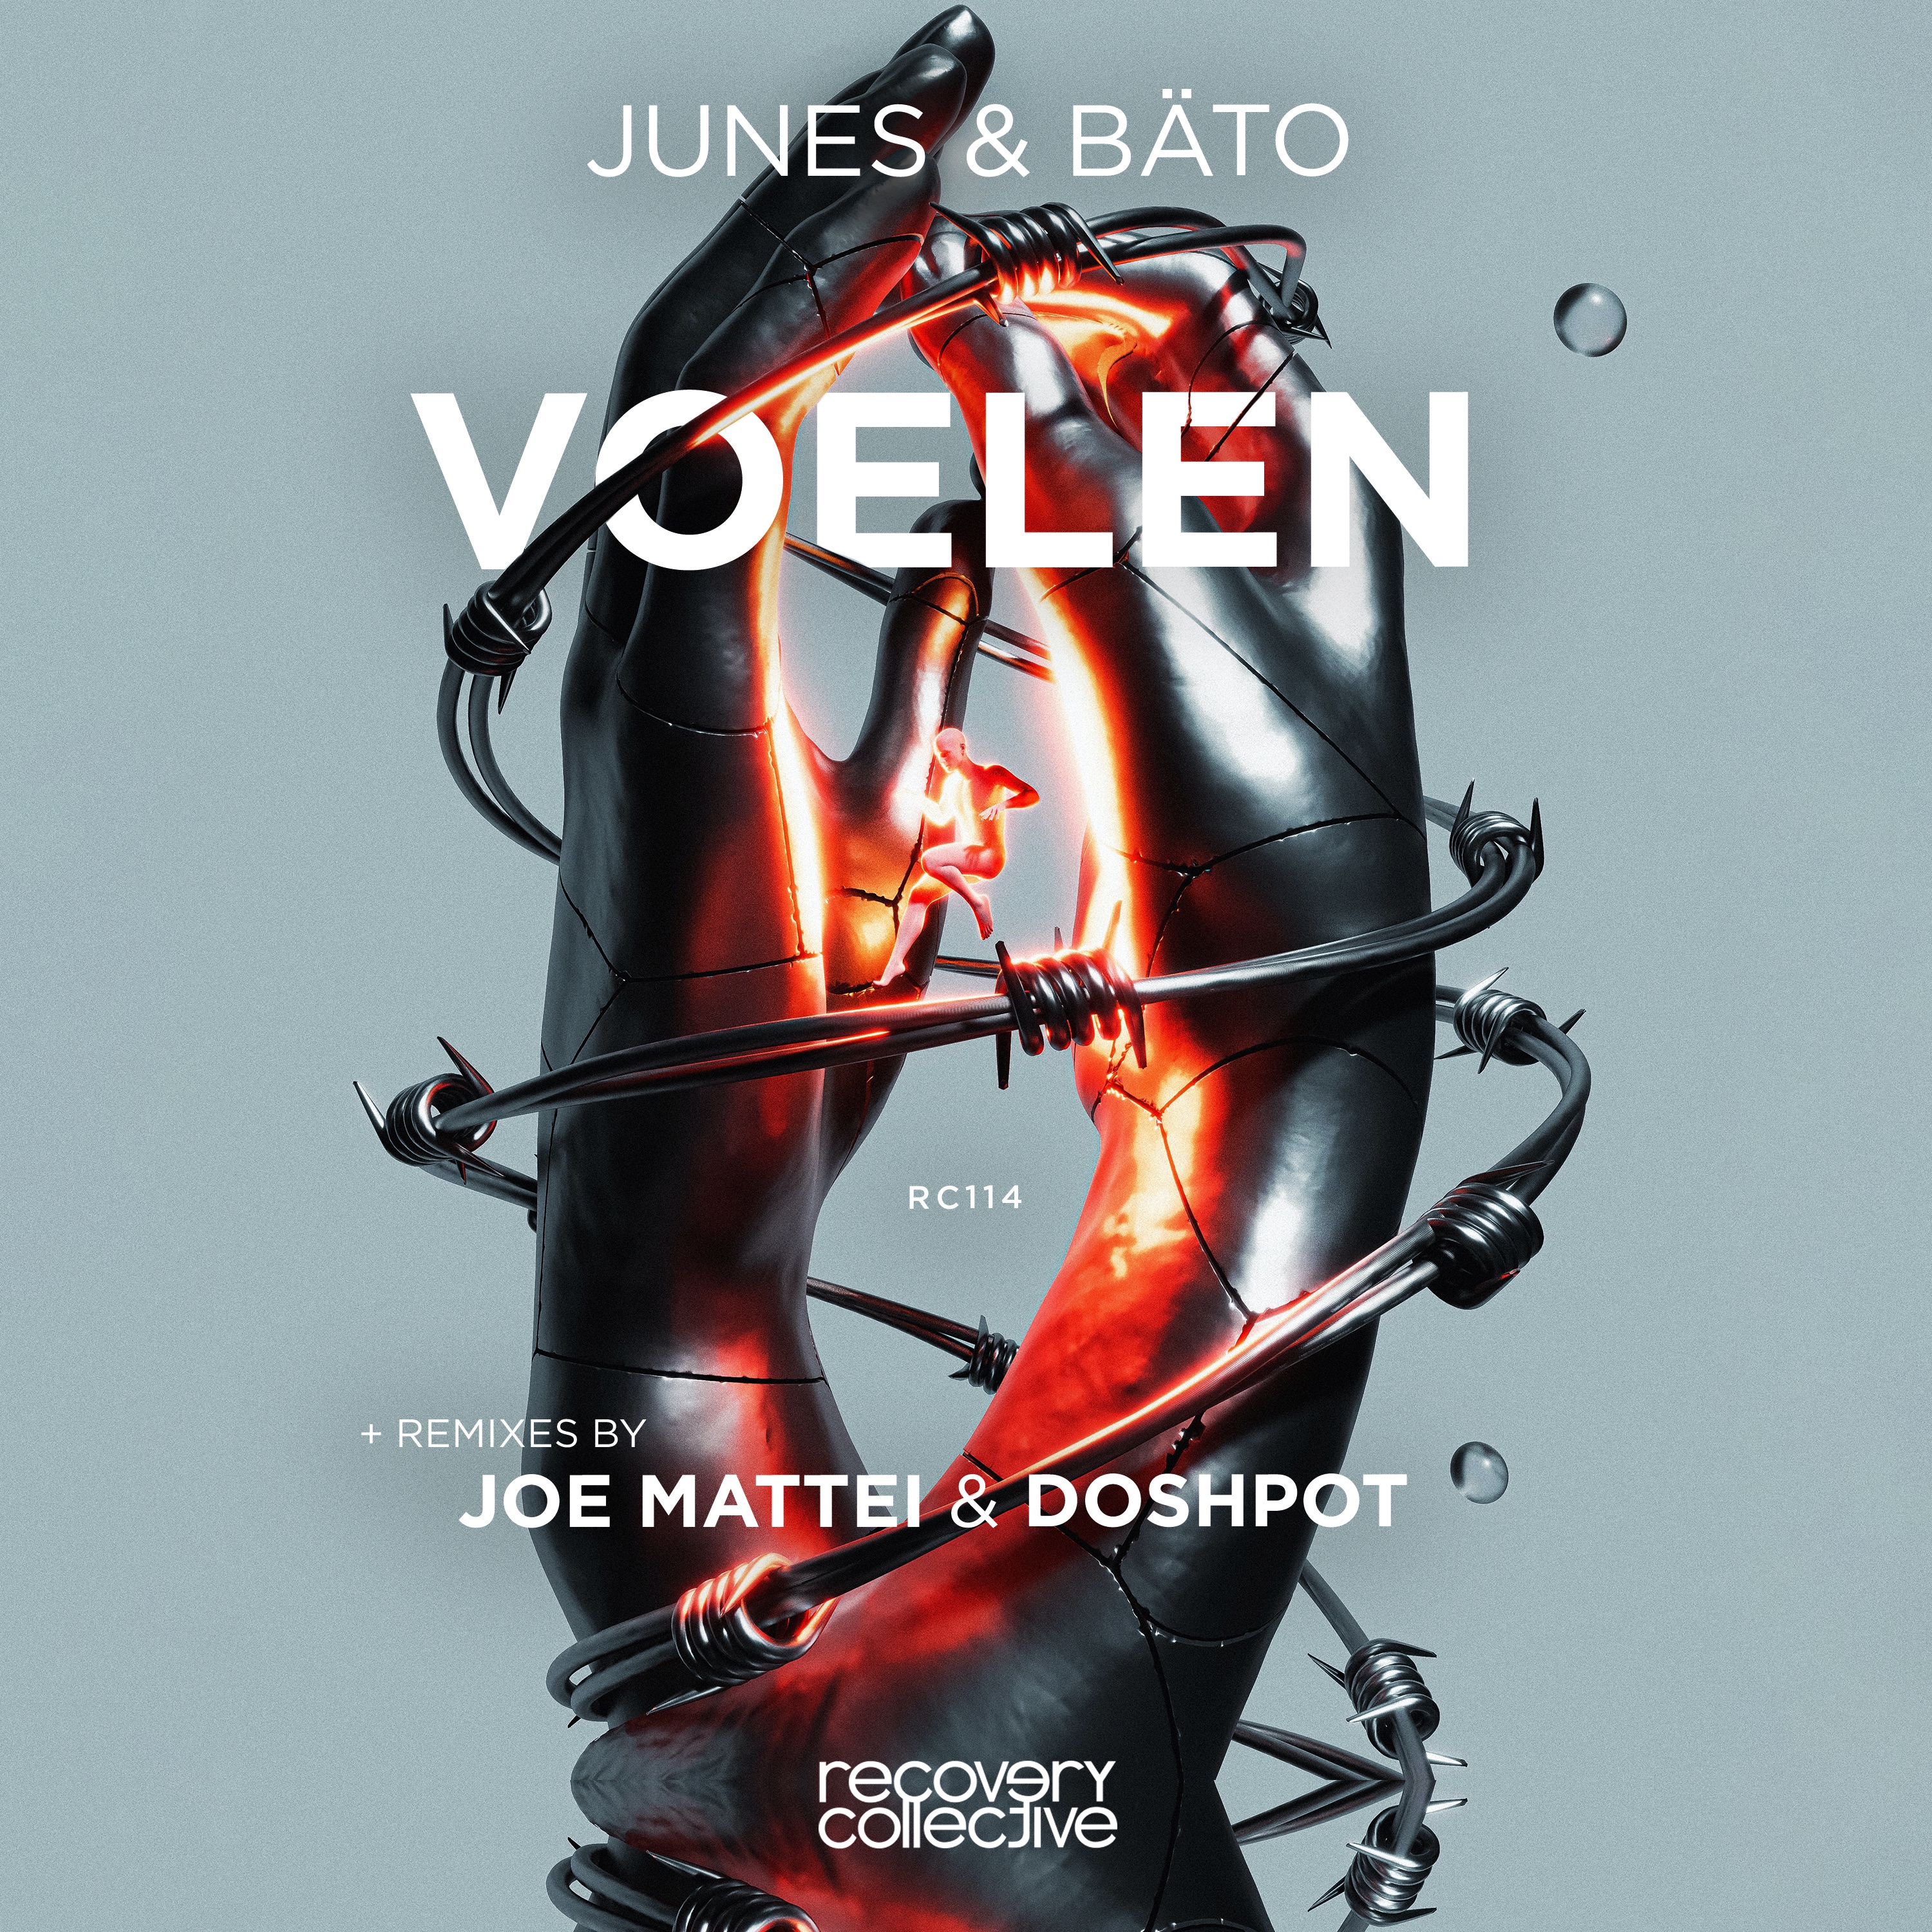 Descarregar JUNES & BÄTO - Voelen (Original Mix)